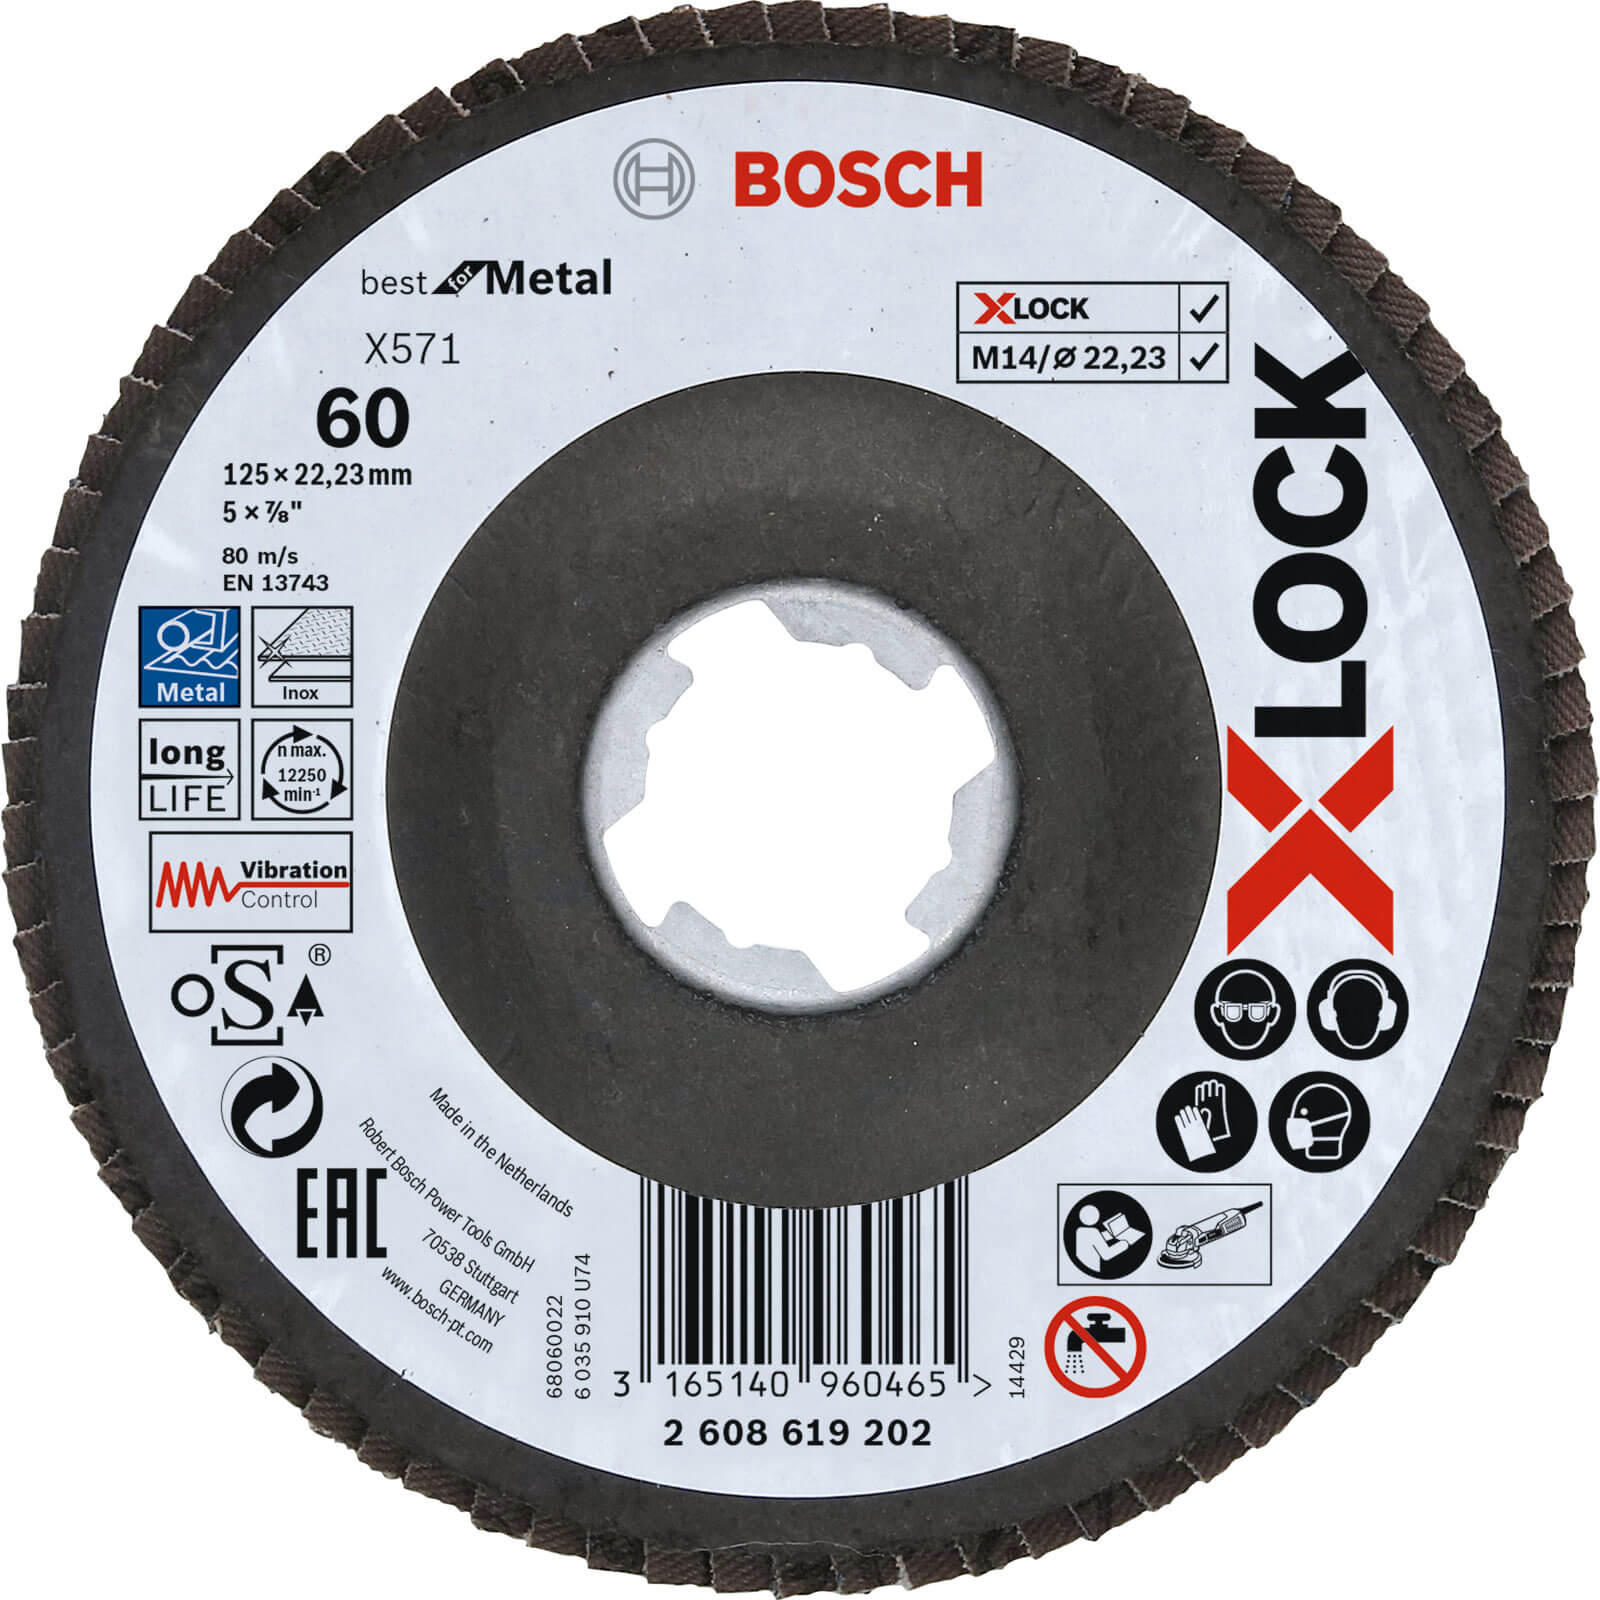 Image of Bosch X Lock Zirconium Abrasive Flap Disc 125mm 60g Pack of 1